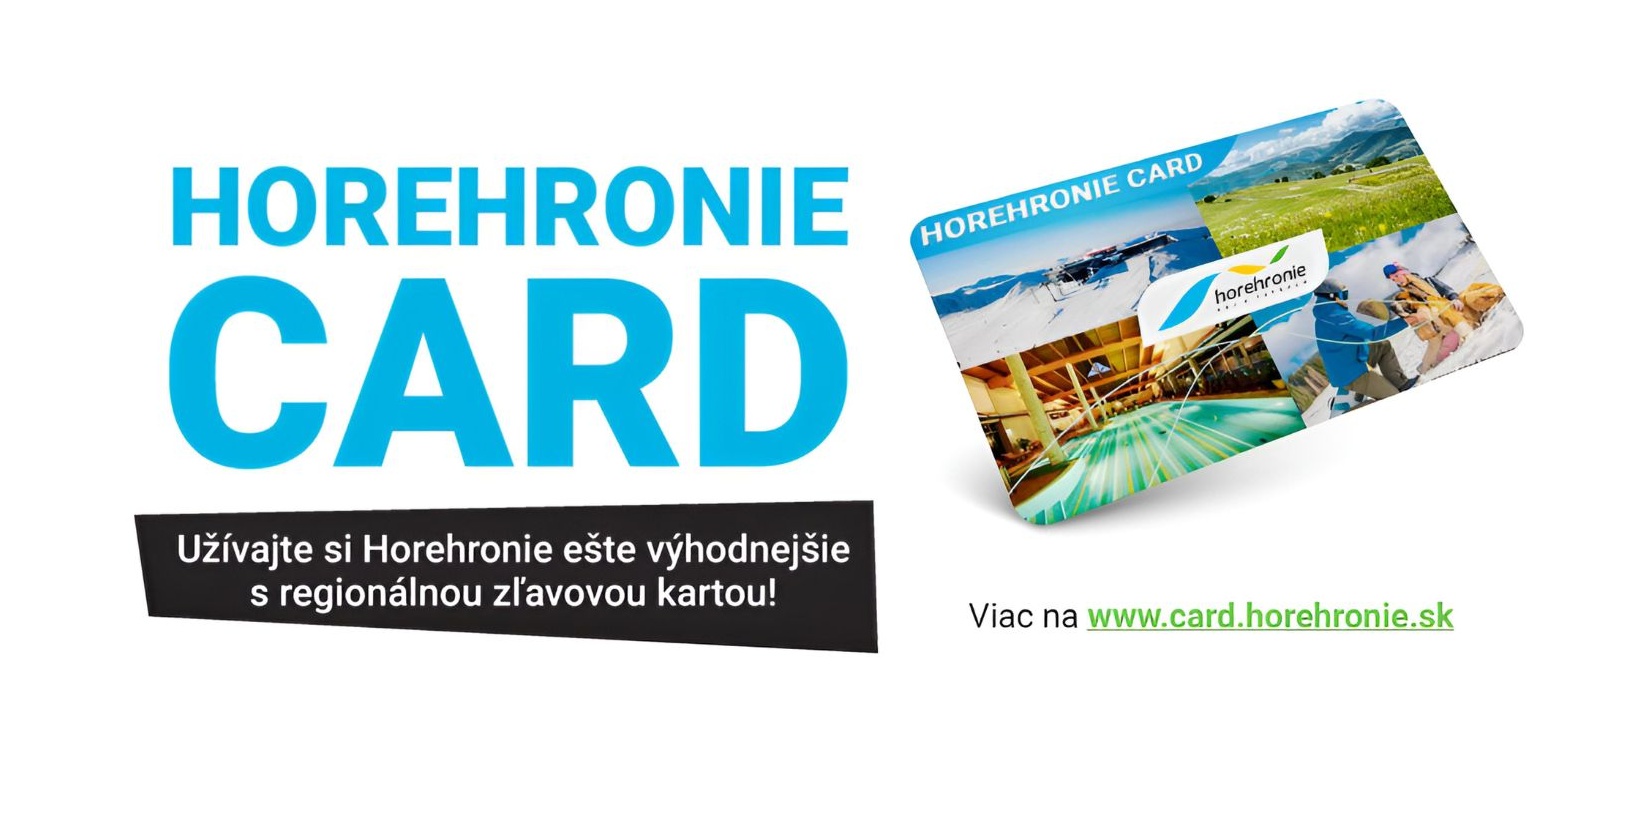 Horehronie card